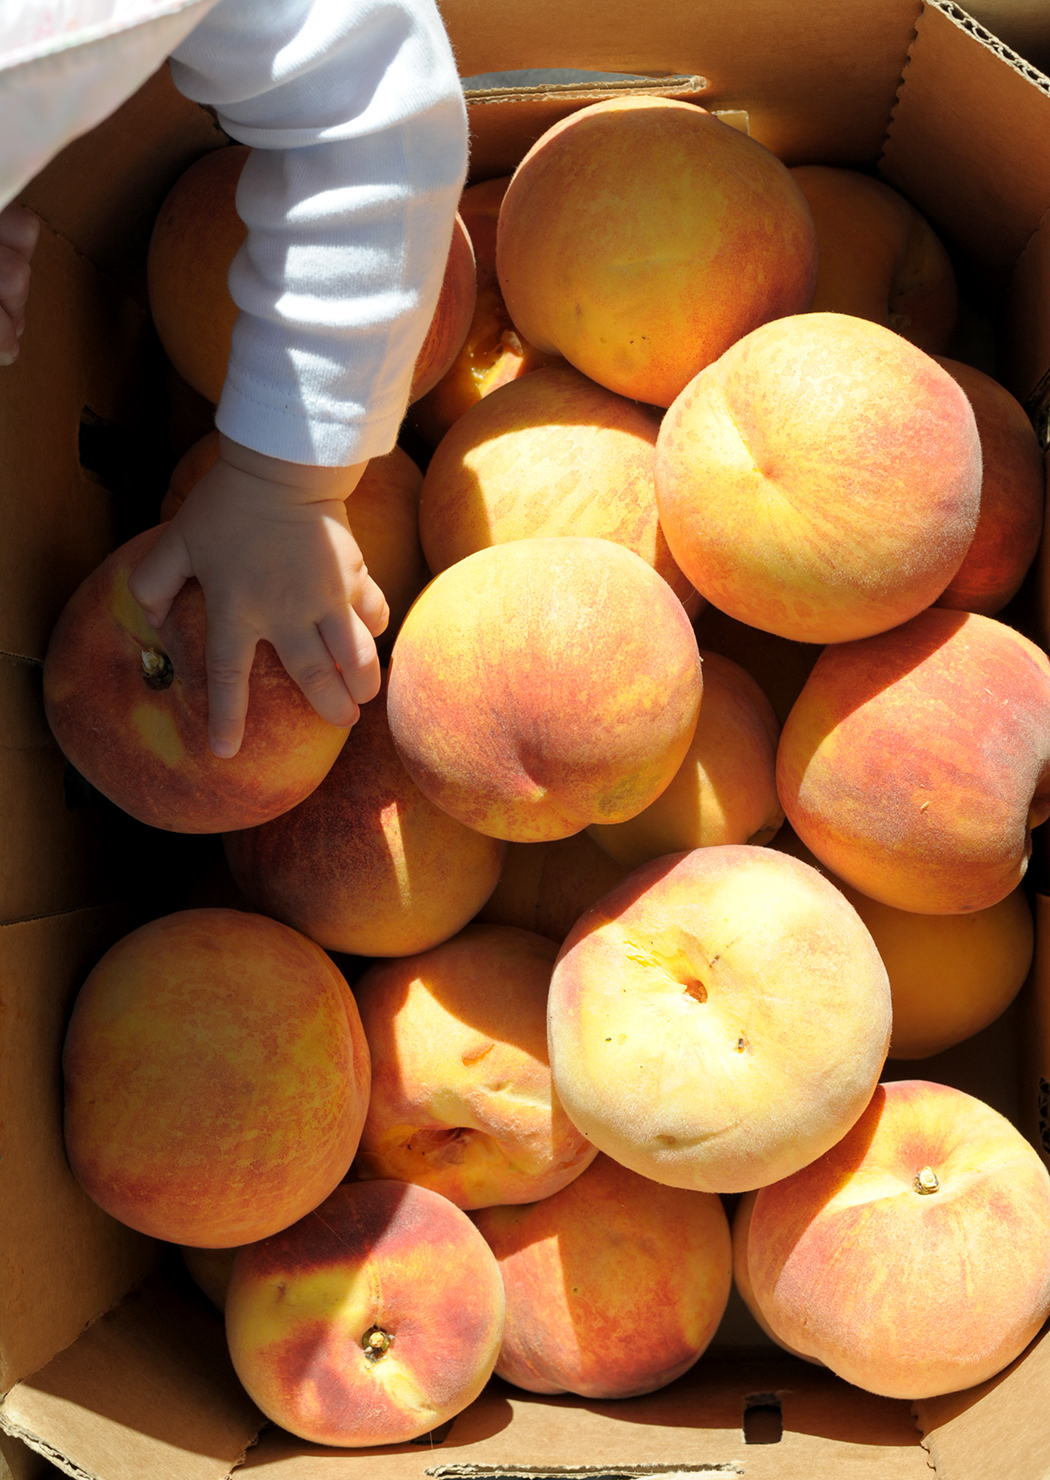 Peach Picking Trip to Paonia